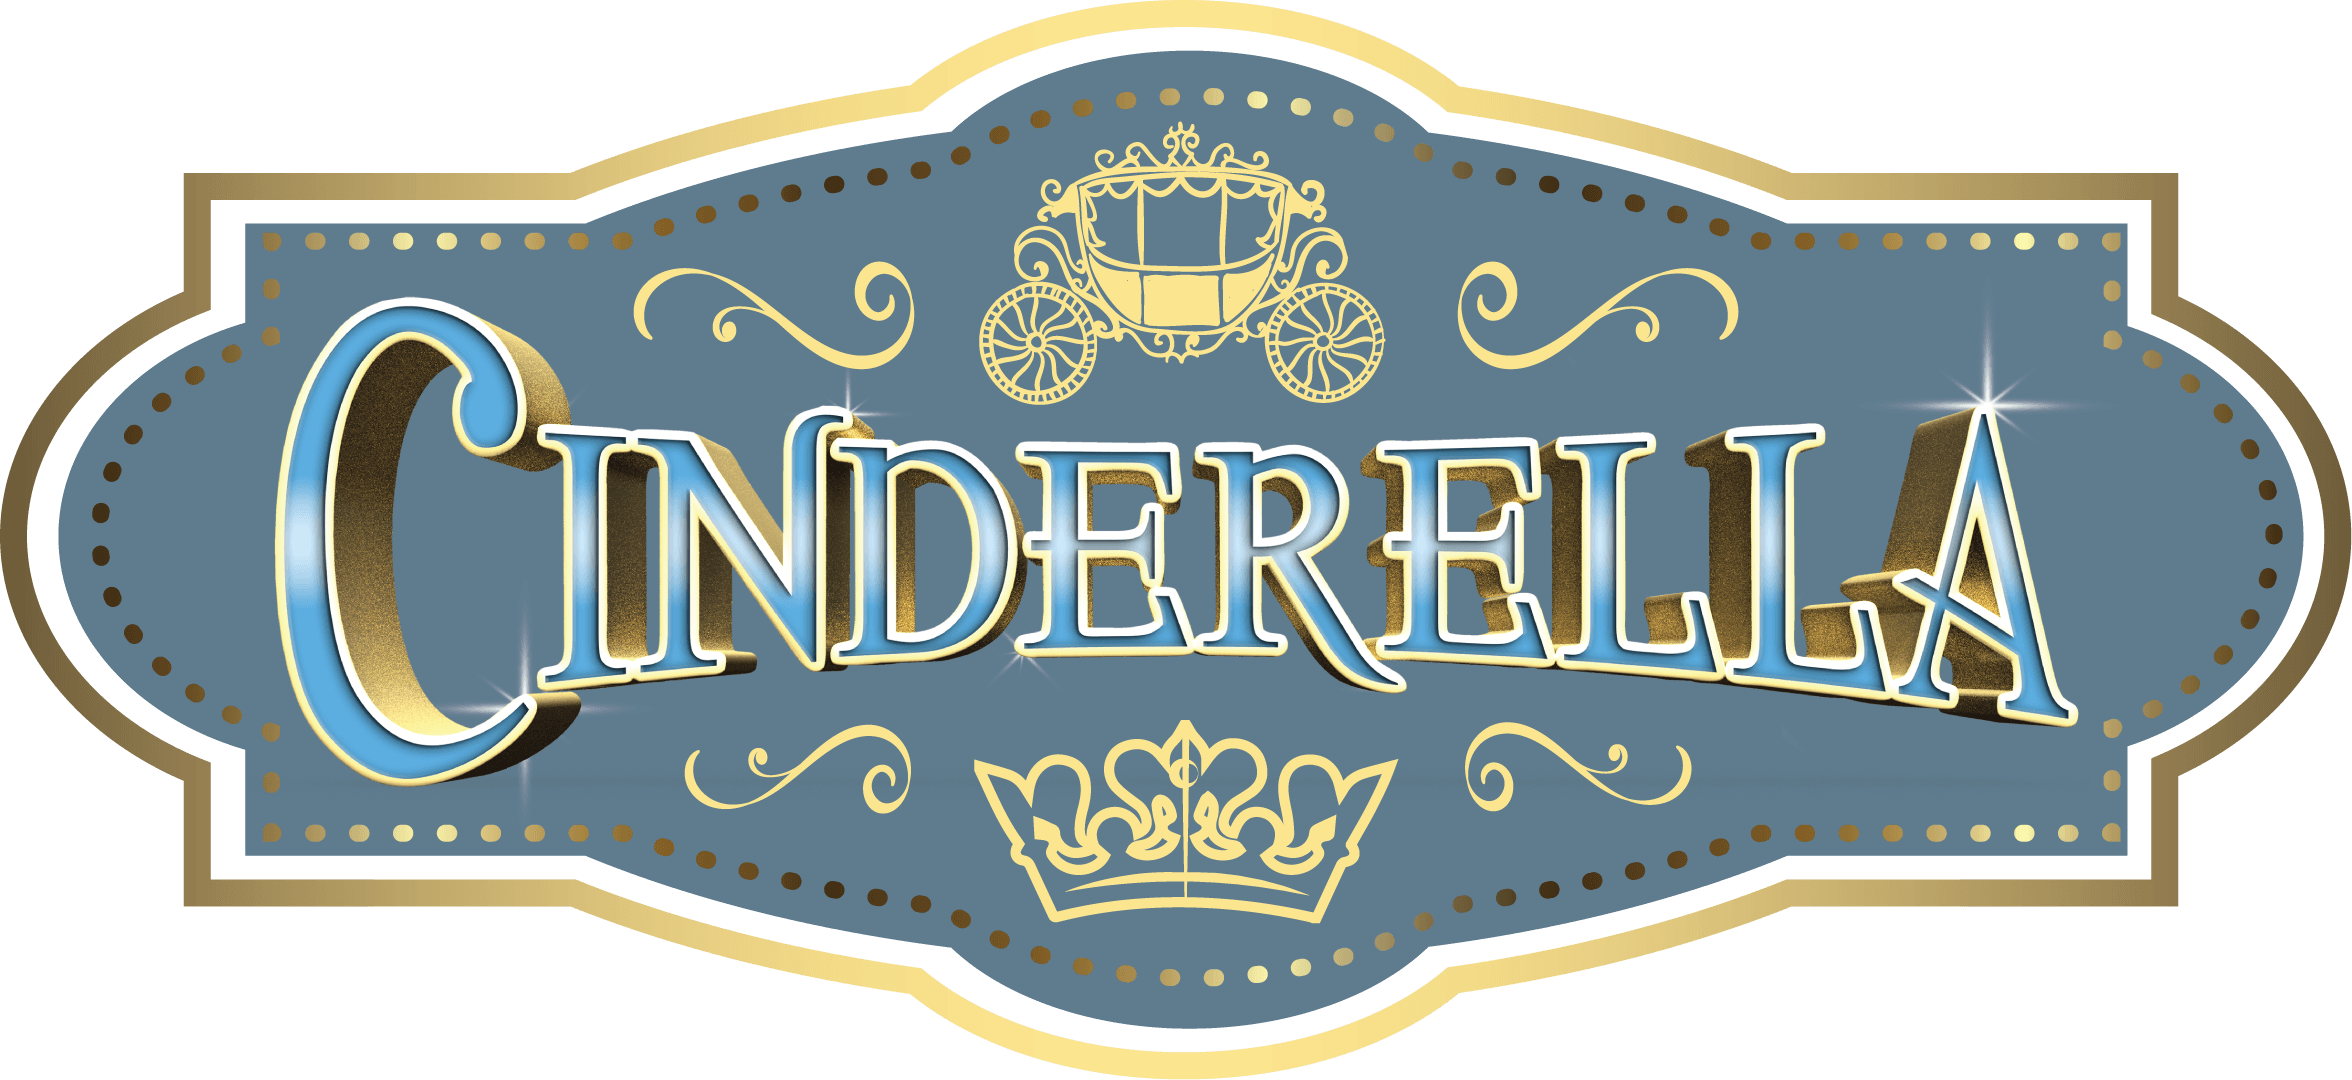 Cinderella Logo - Cinderella logo png 7 » PNG Image